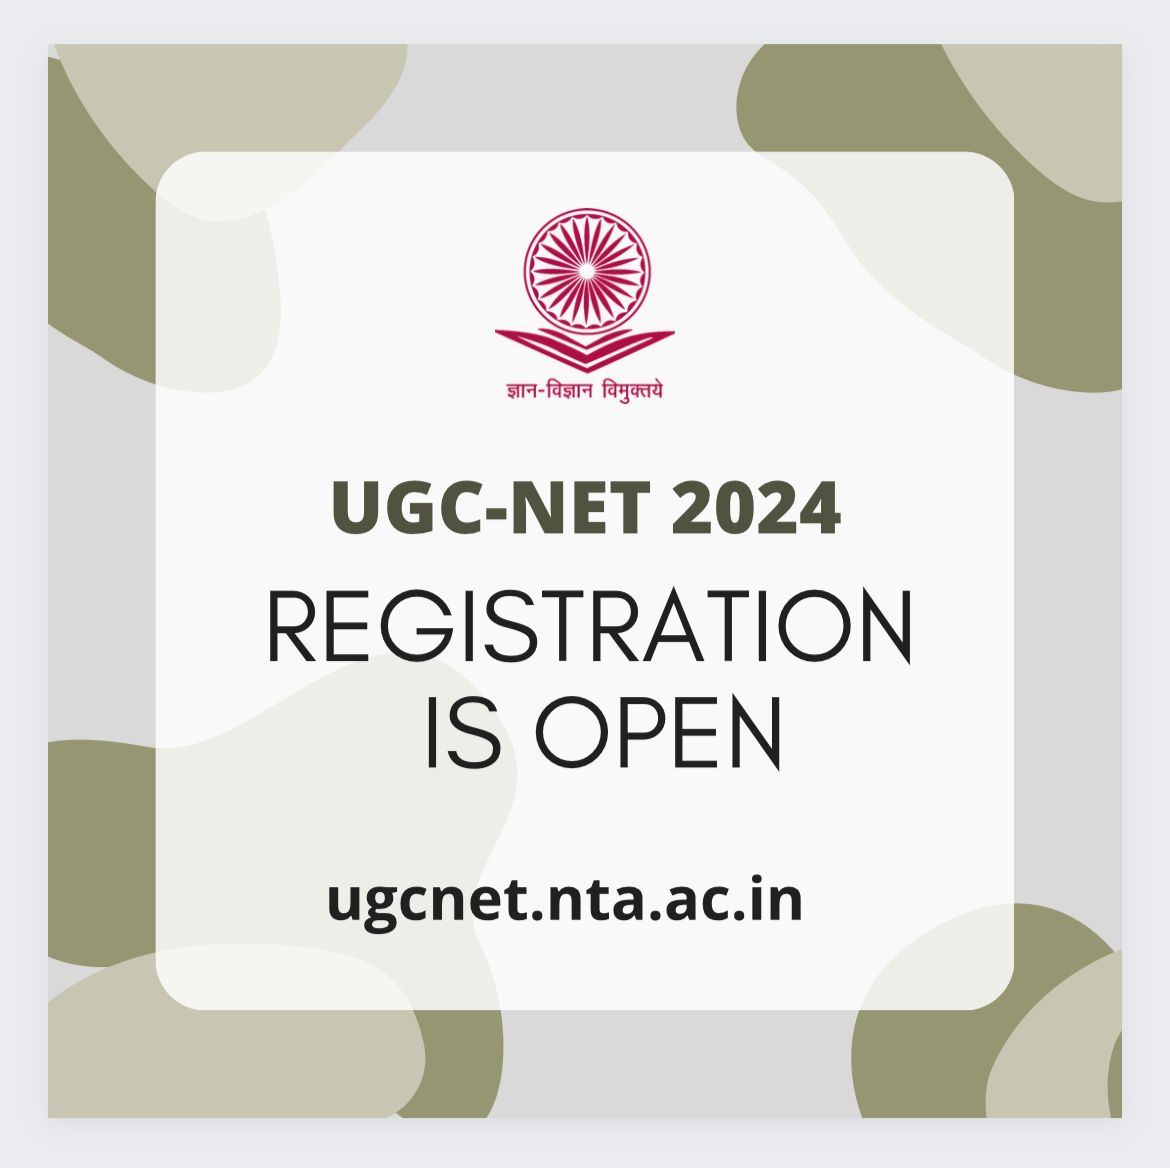 UGC NET June 2024 registration is started now
#ugcnet #net2024 #ugc